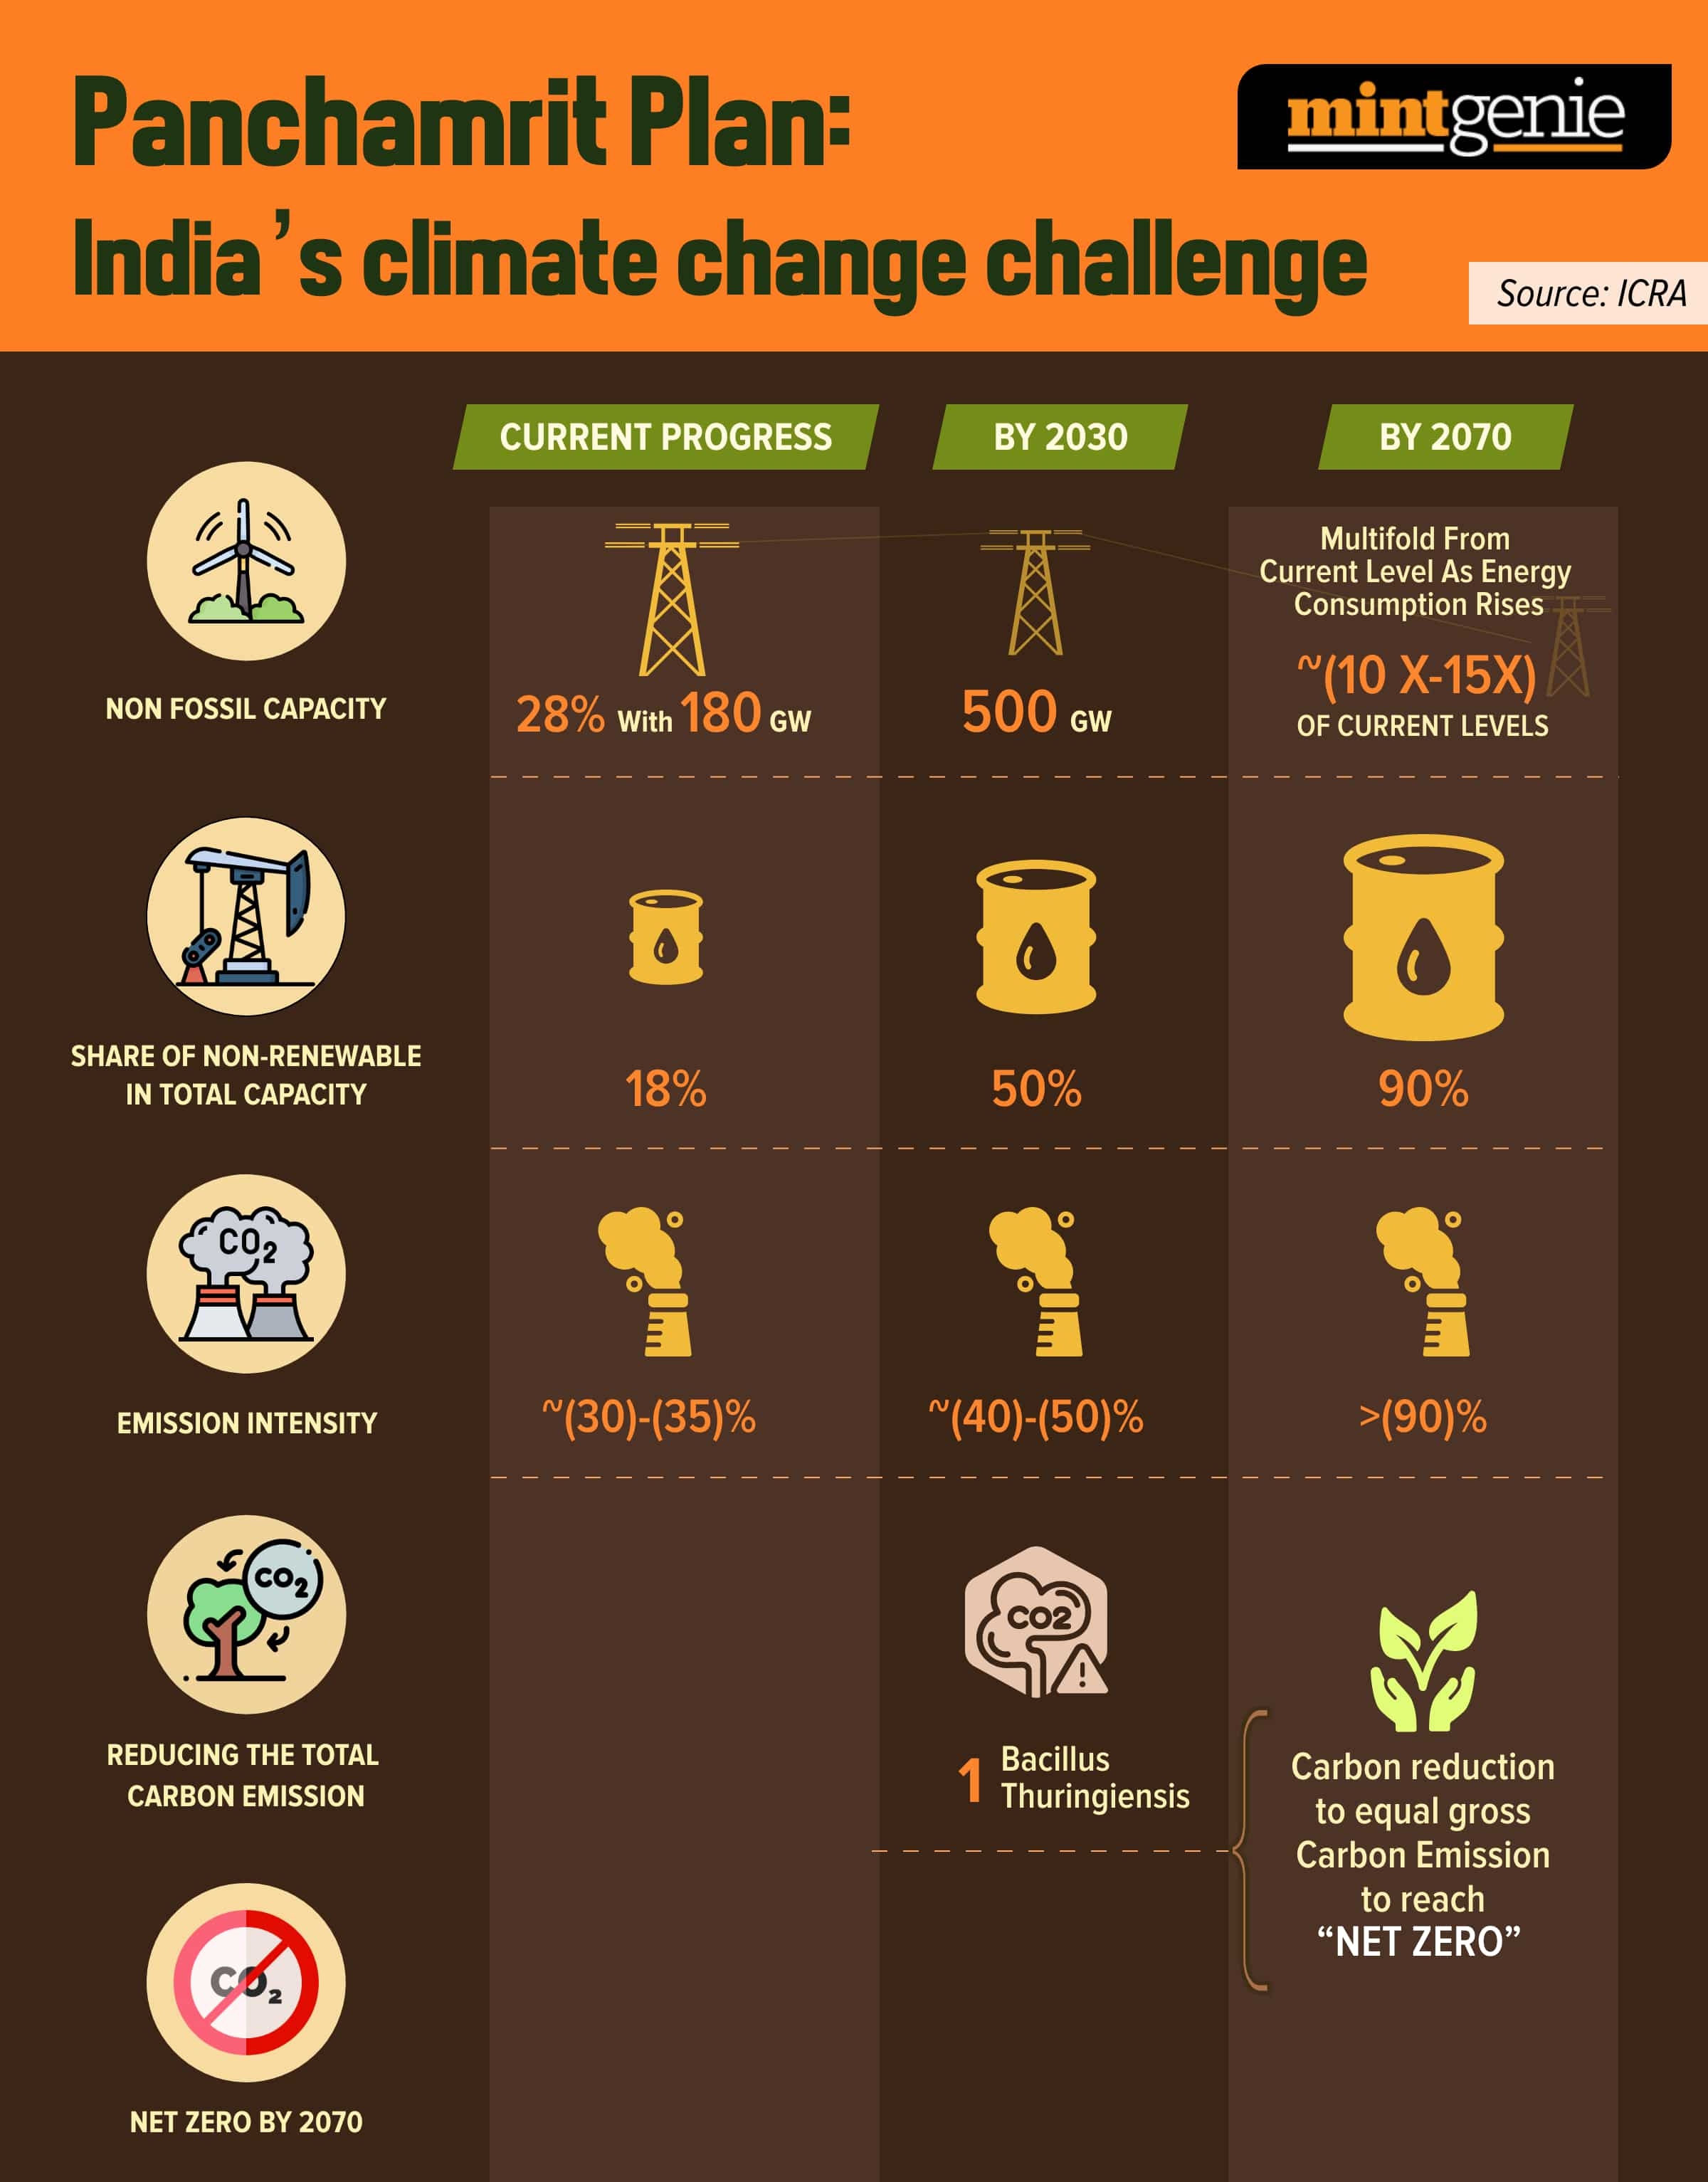 India's Climate change challenge